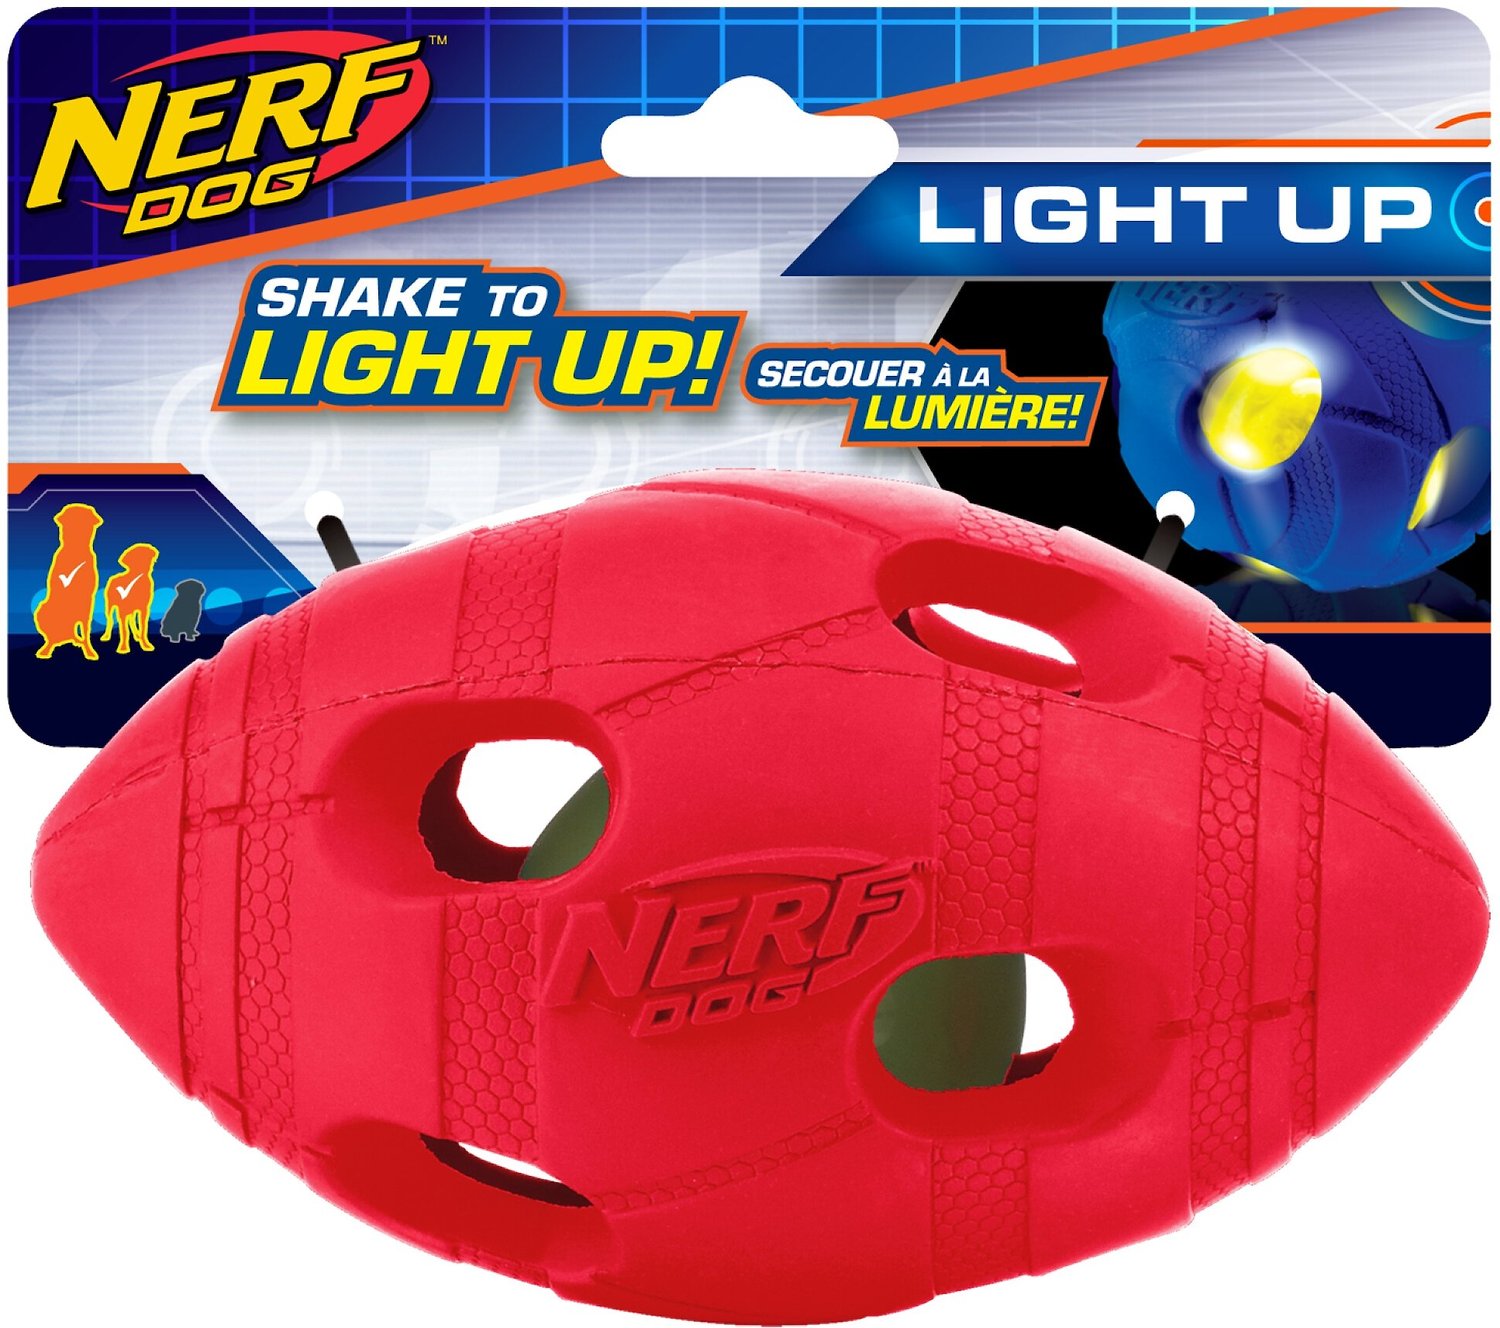 Nerf Dog Light Up Led Bash Football Dog Toy Red Chewy Com